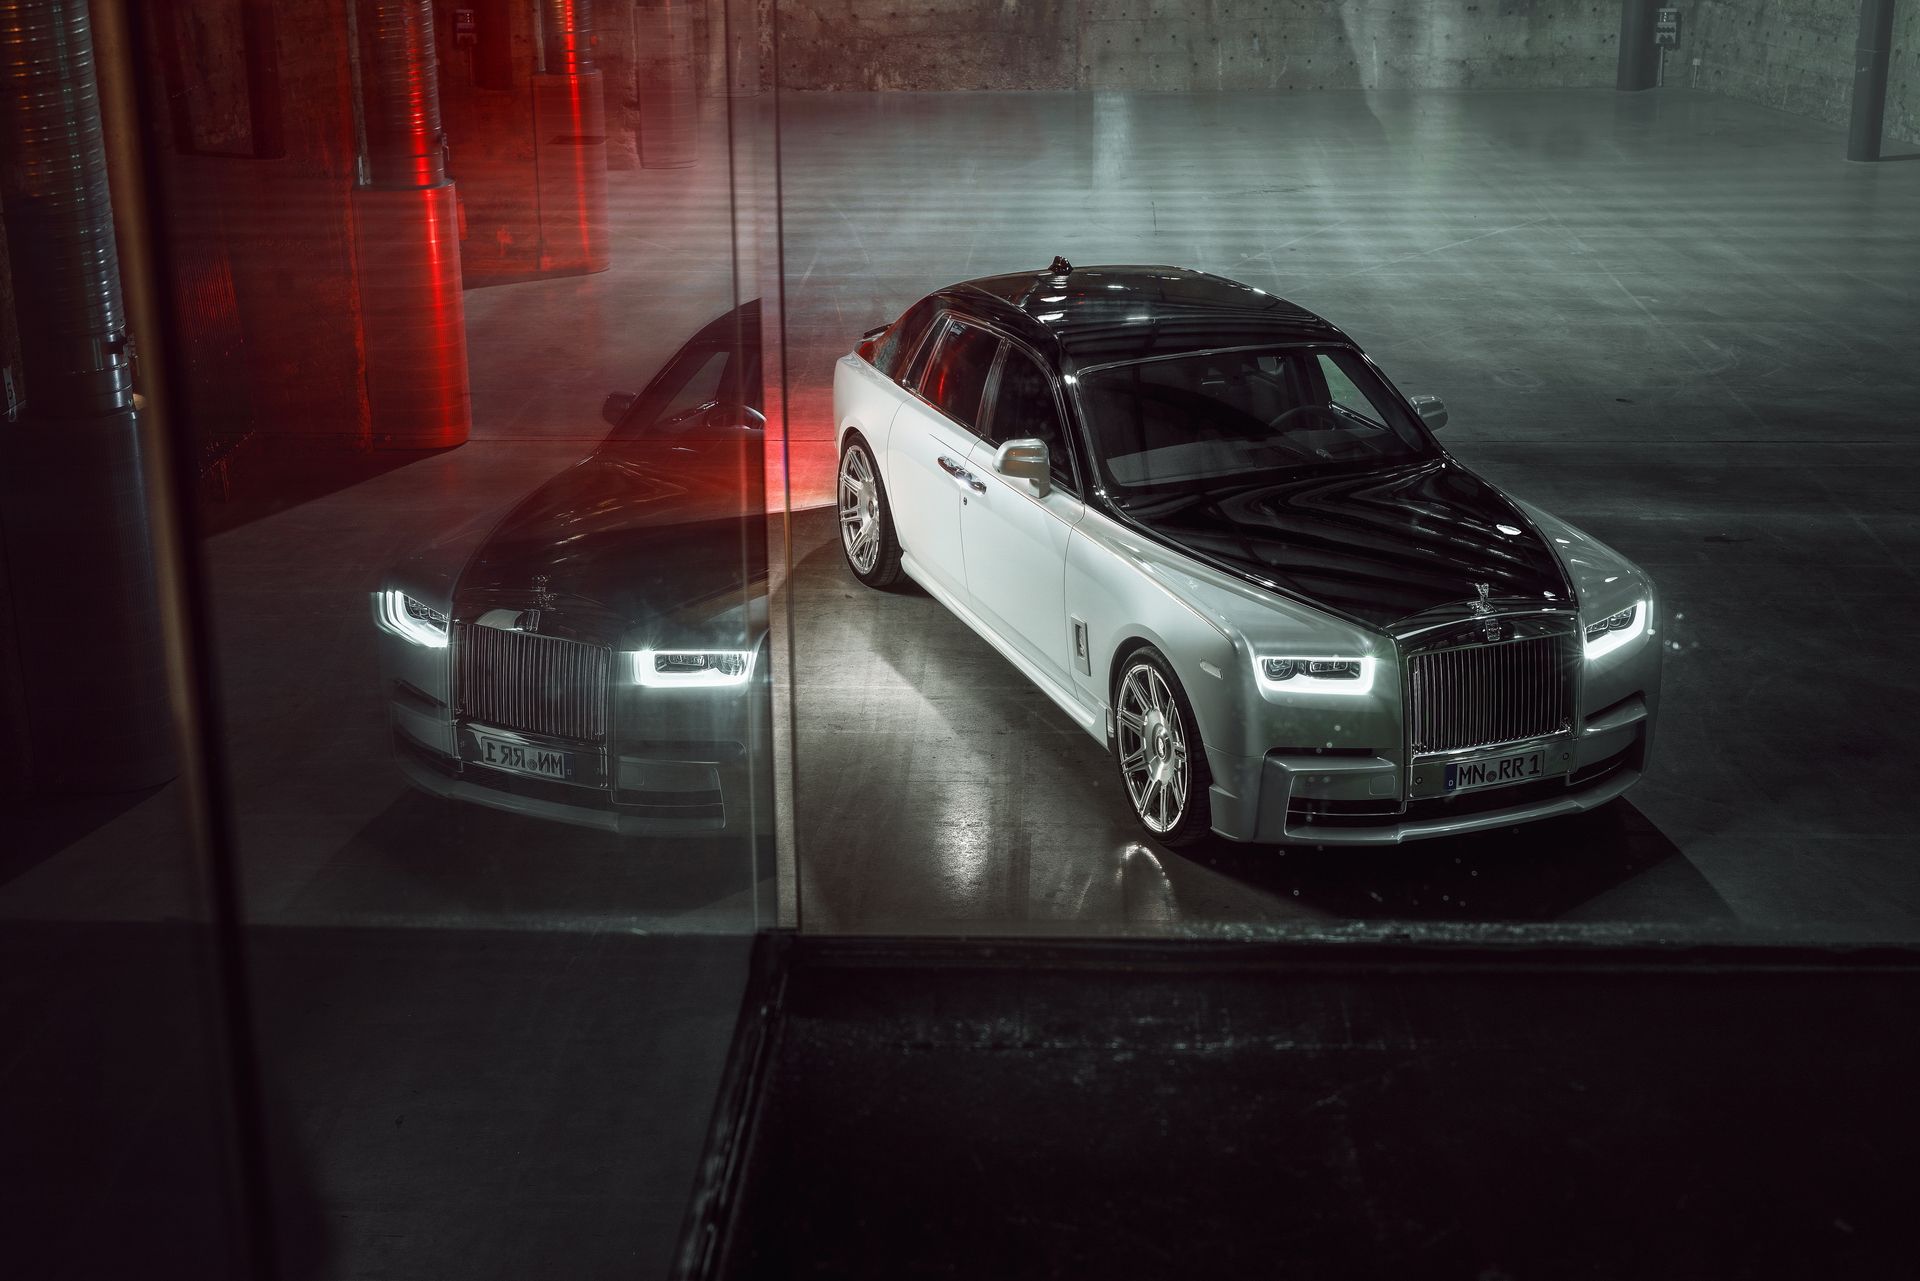 Rolls Royce Phantom VIII Gets New Look From Spofec